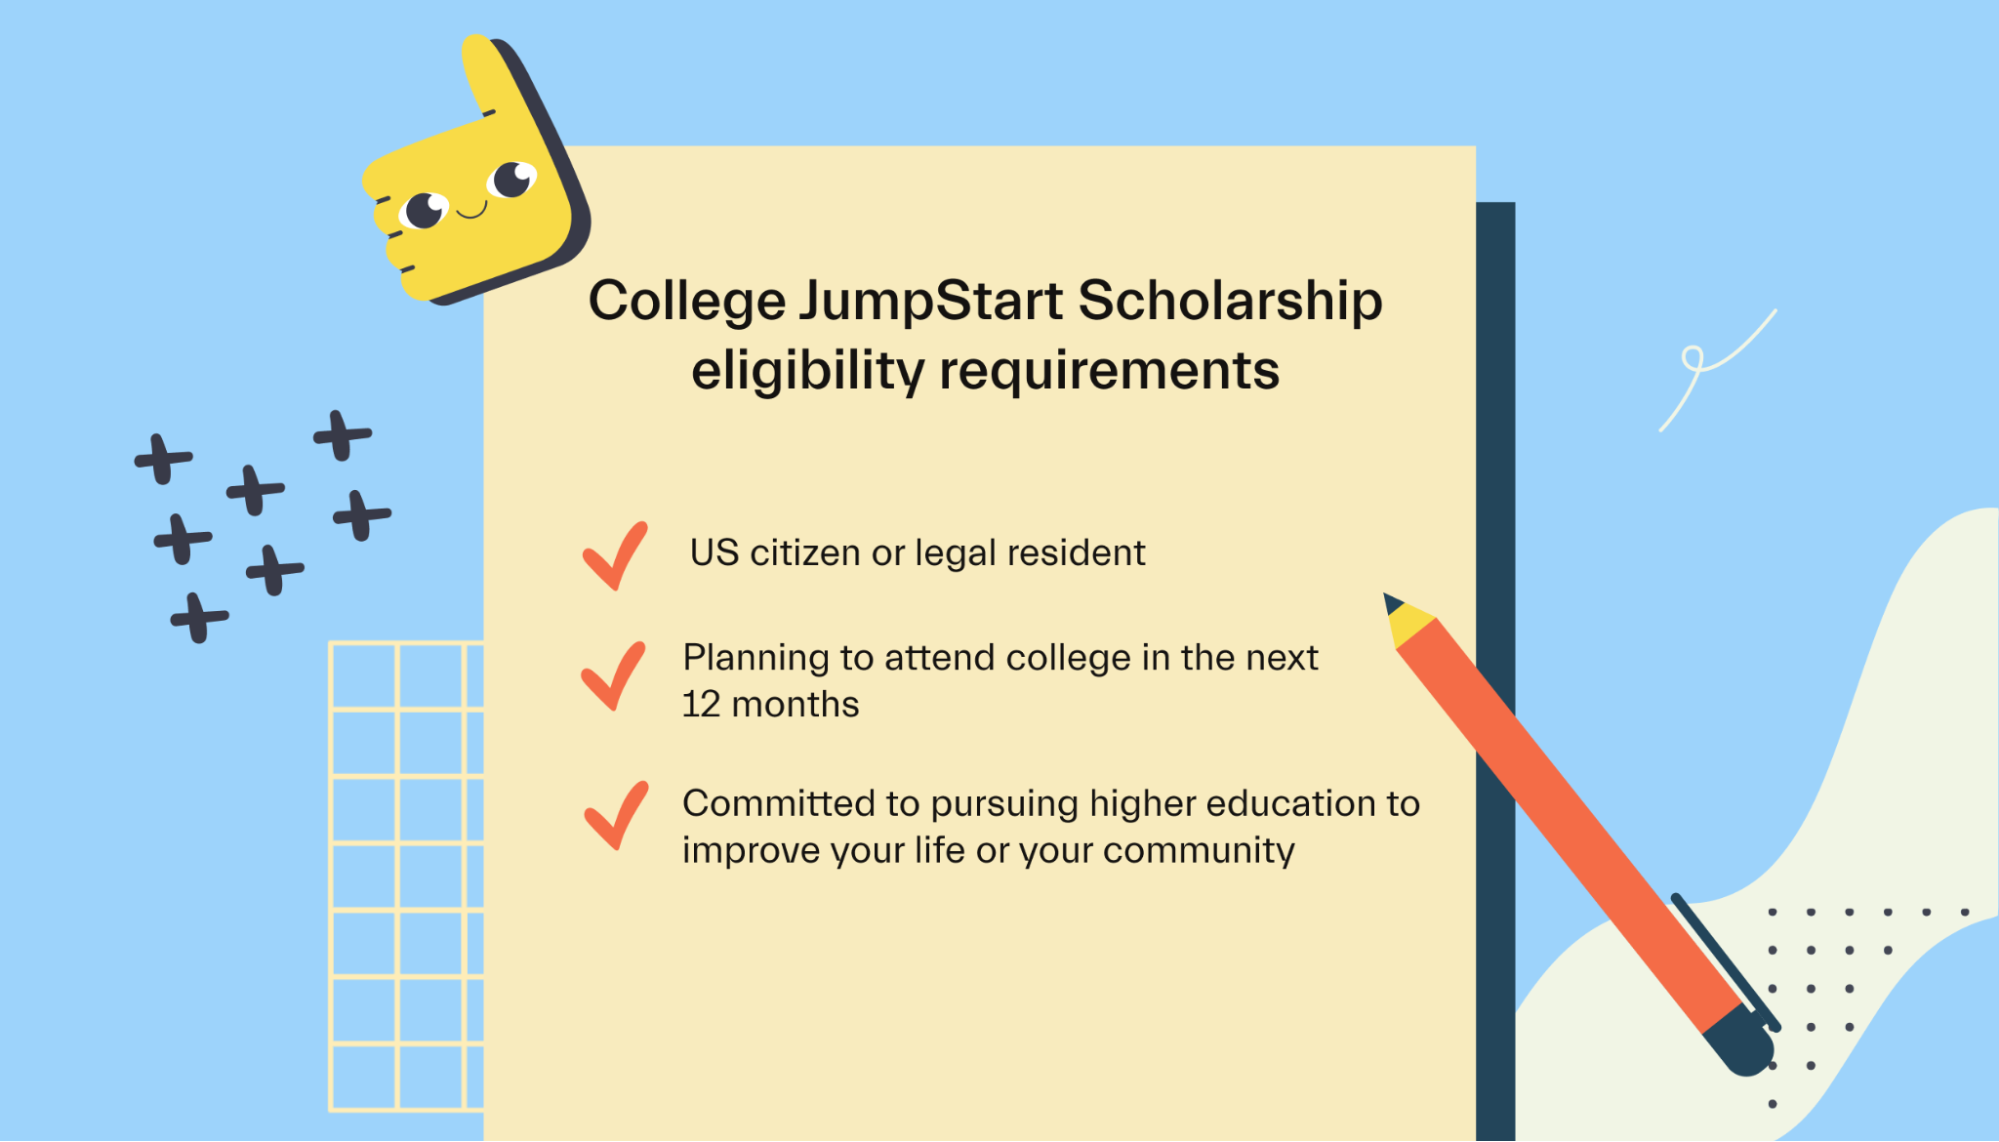 College JumpStart Scholarship eligibility requirements